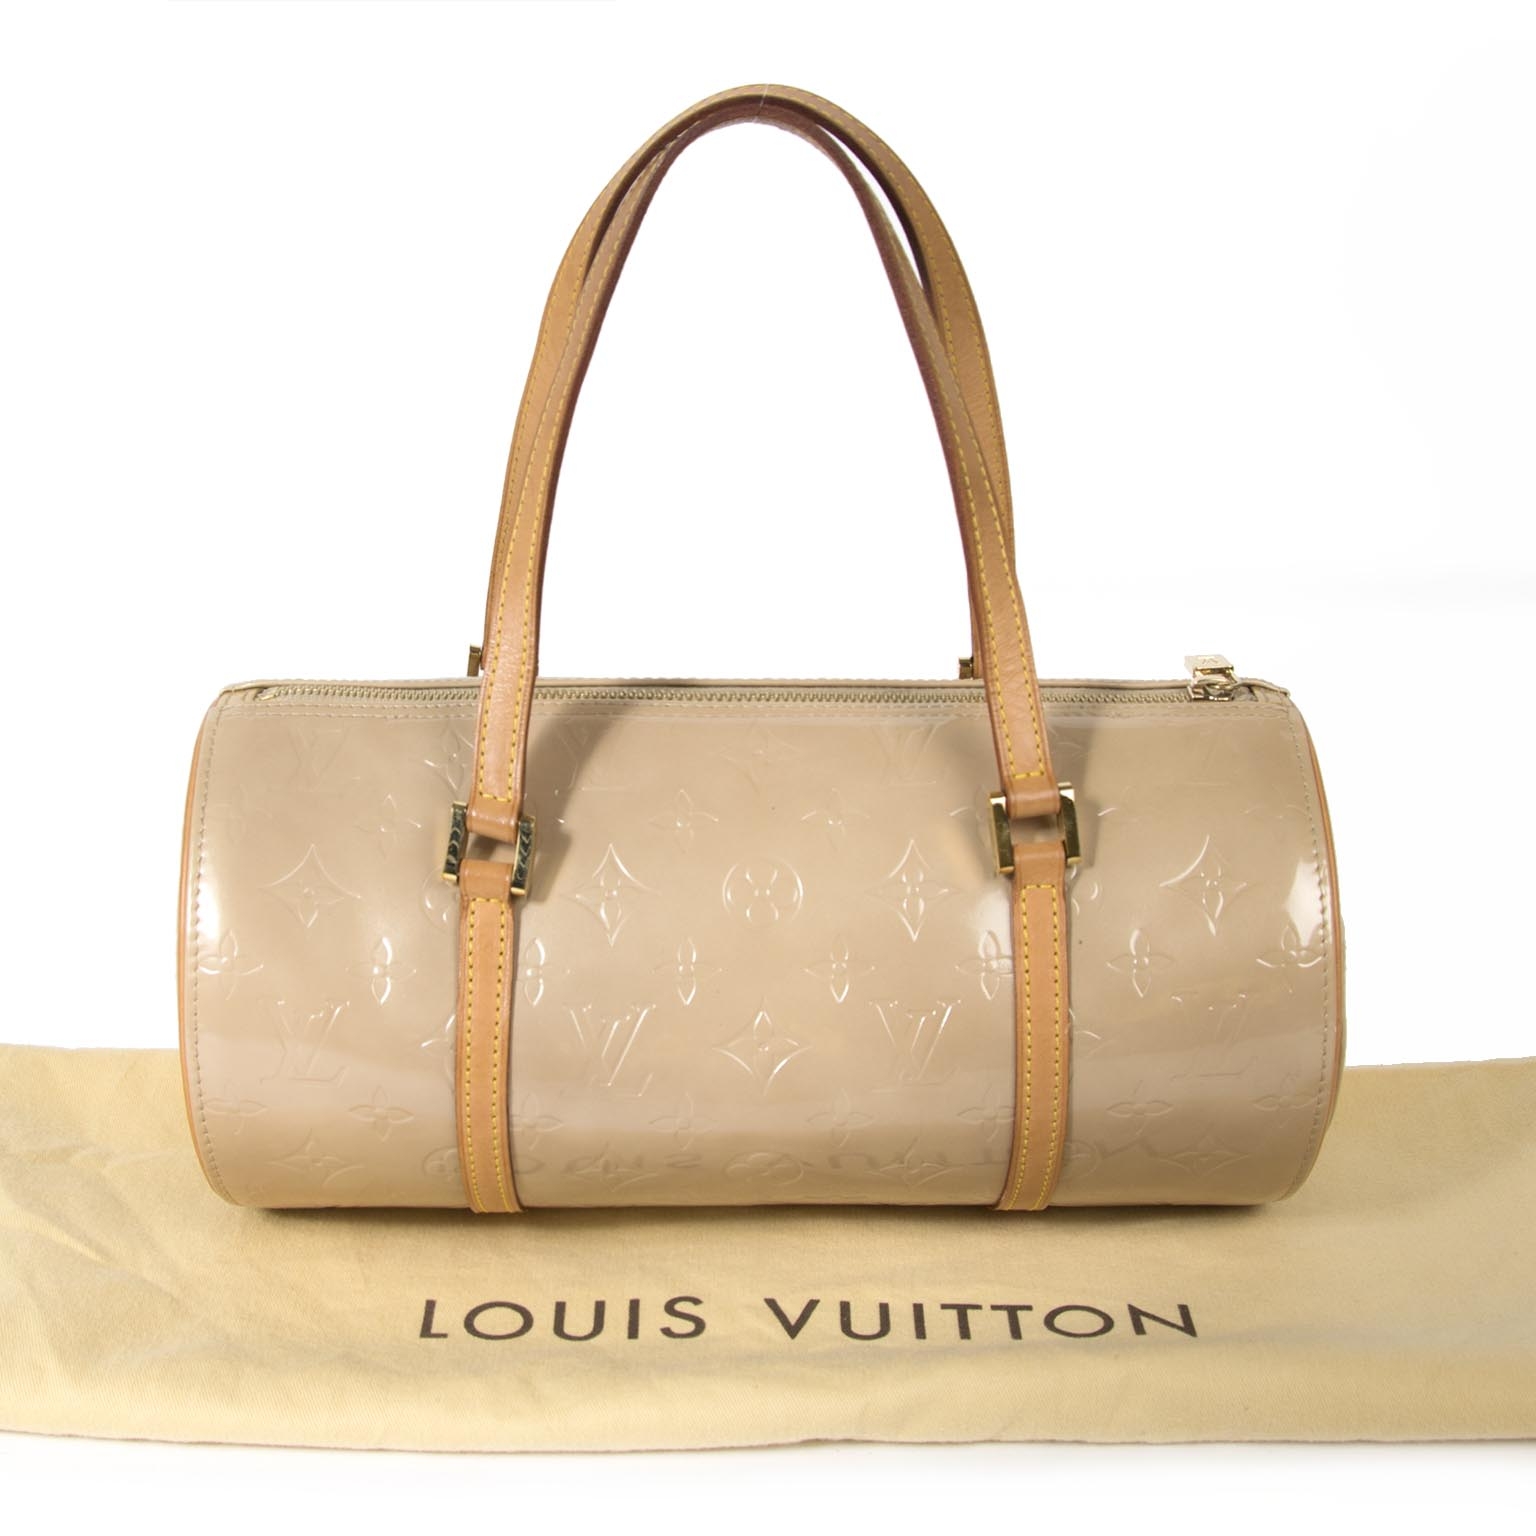 At Auction: Louis Vuitton, LOUIS VUITTON BEDFORD VANILLA CALF LEATHER  HANDBAG